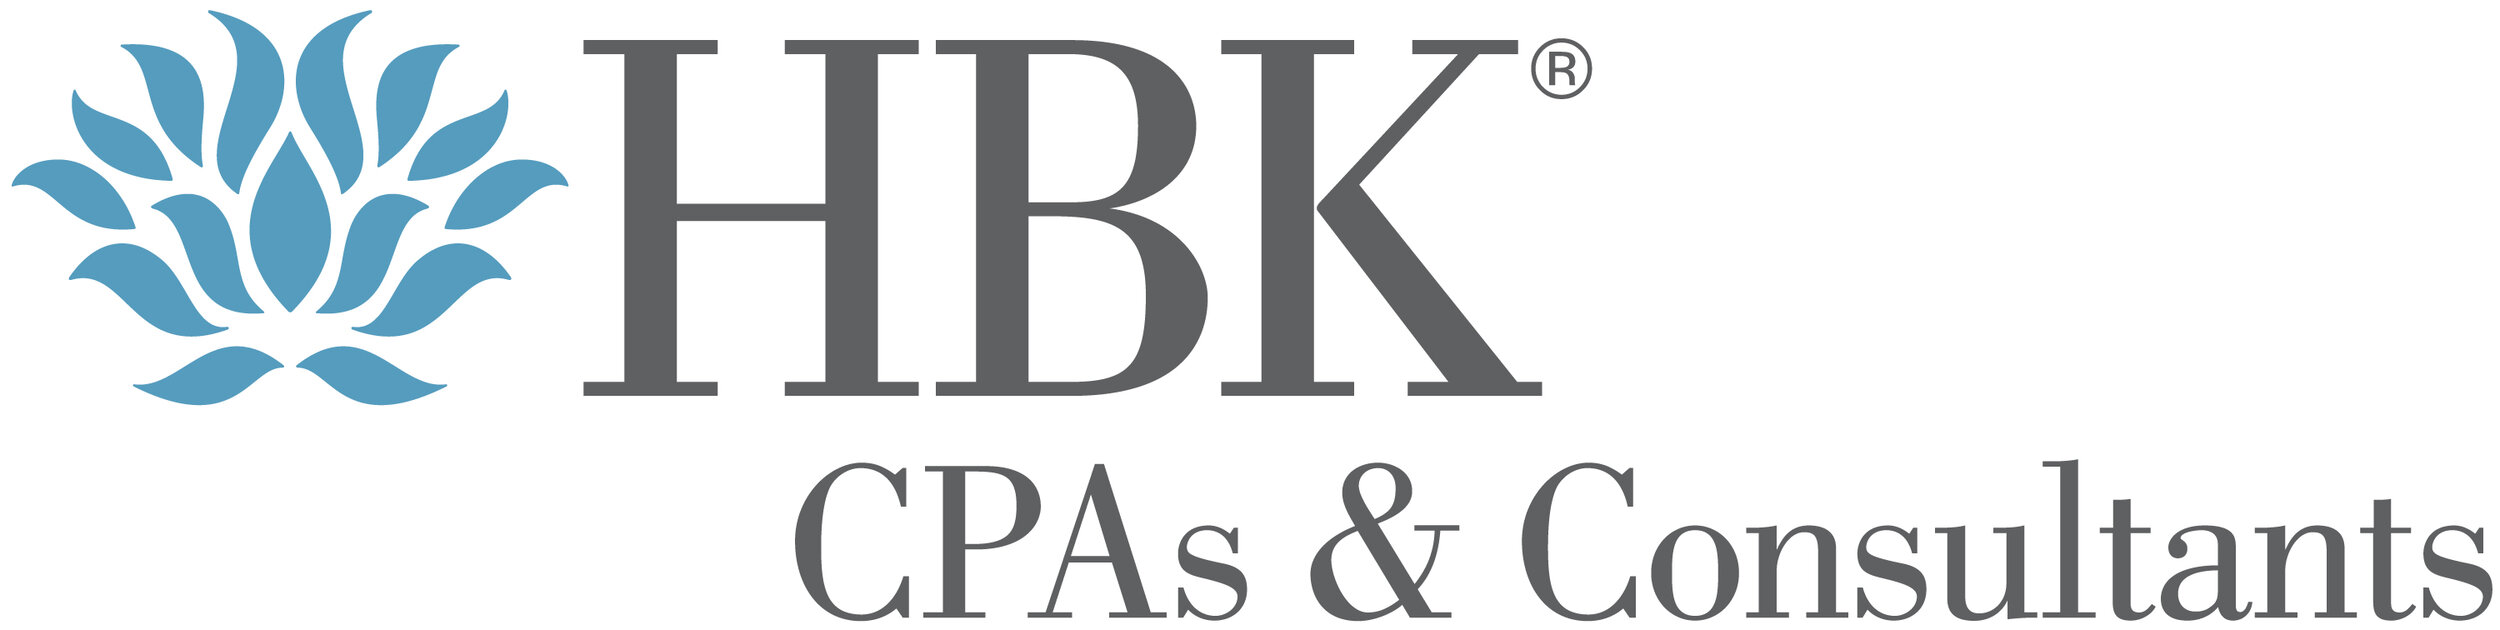 HBKCPA-new-logo.jpg